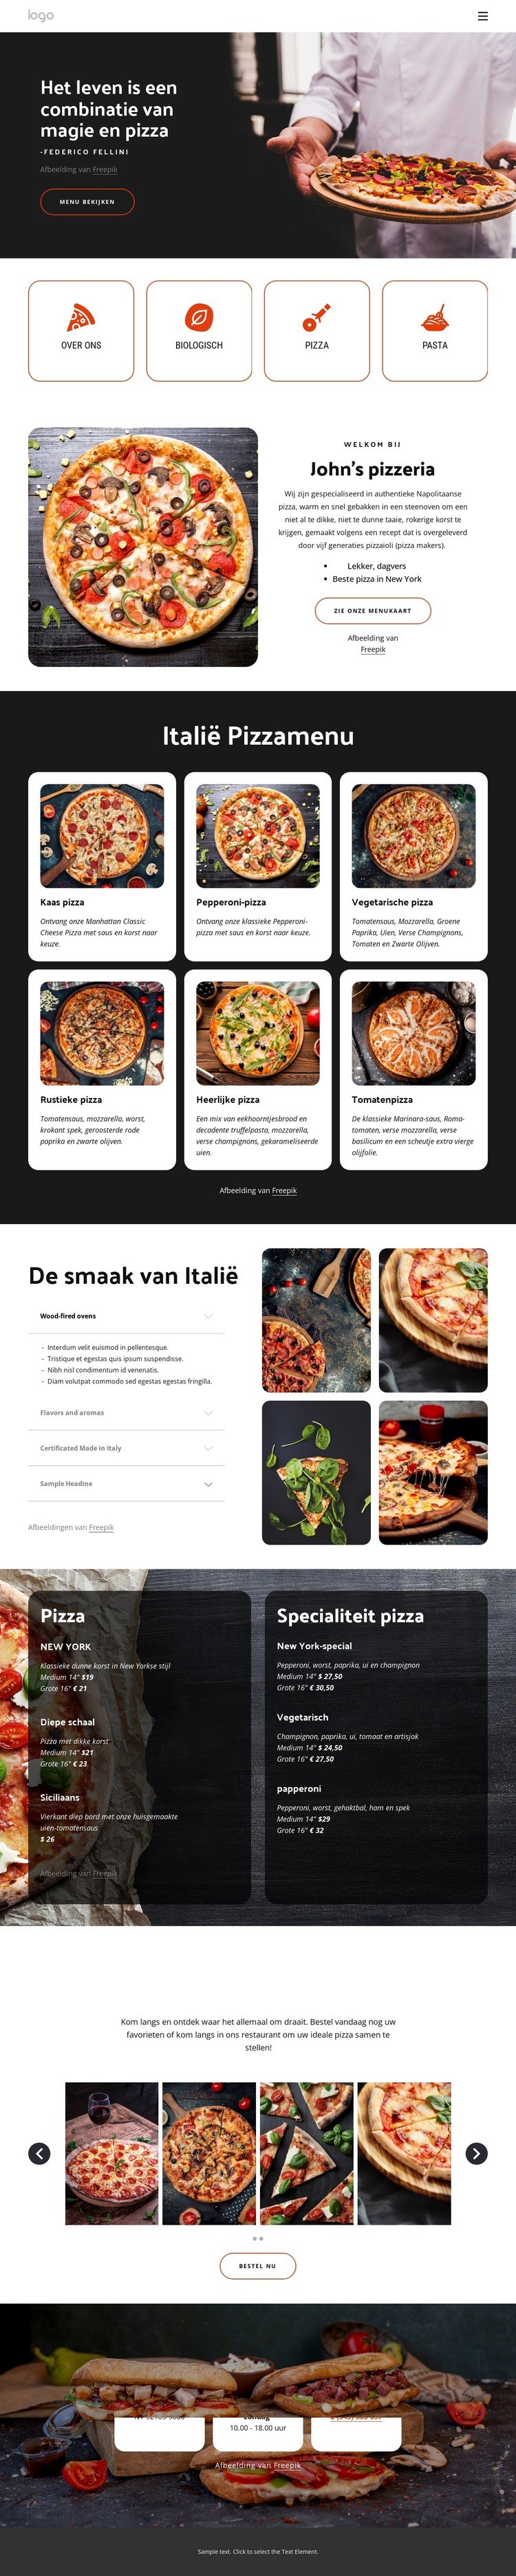 Gezinsvriendelijk pizzarestaurant Website ontwerp